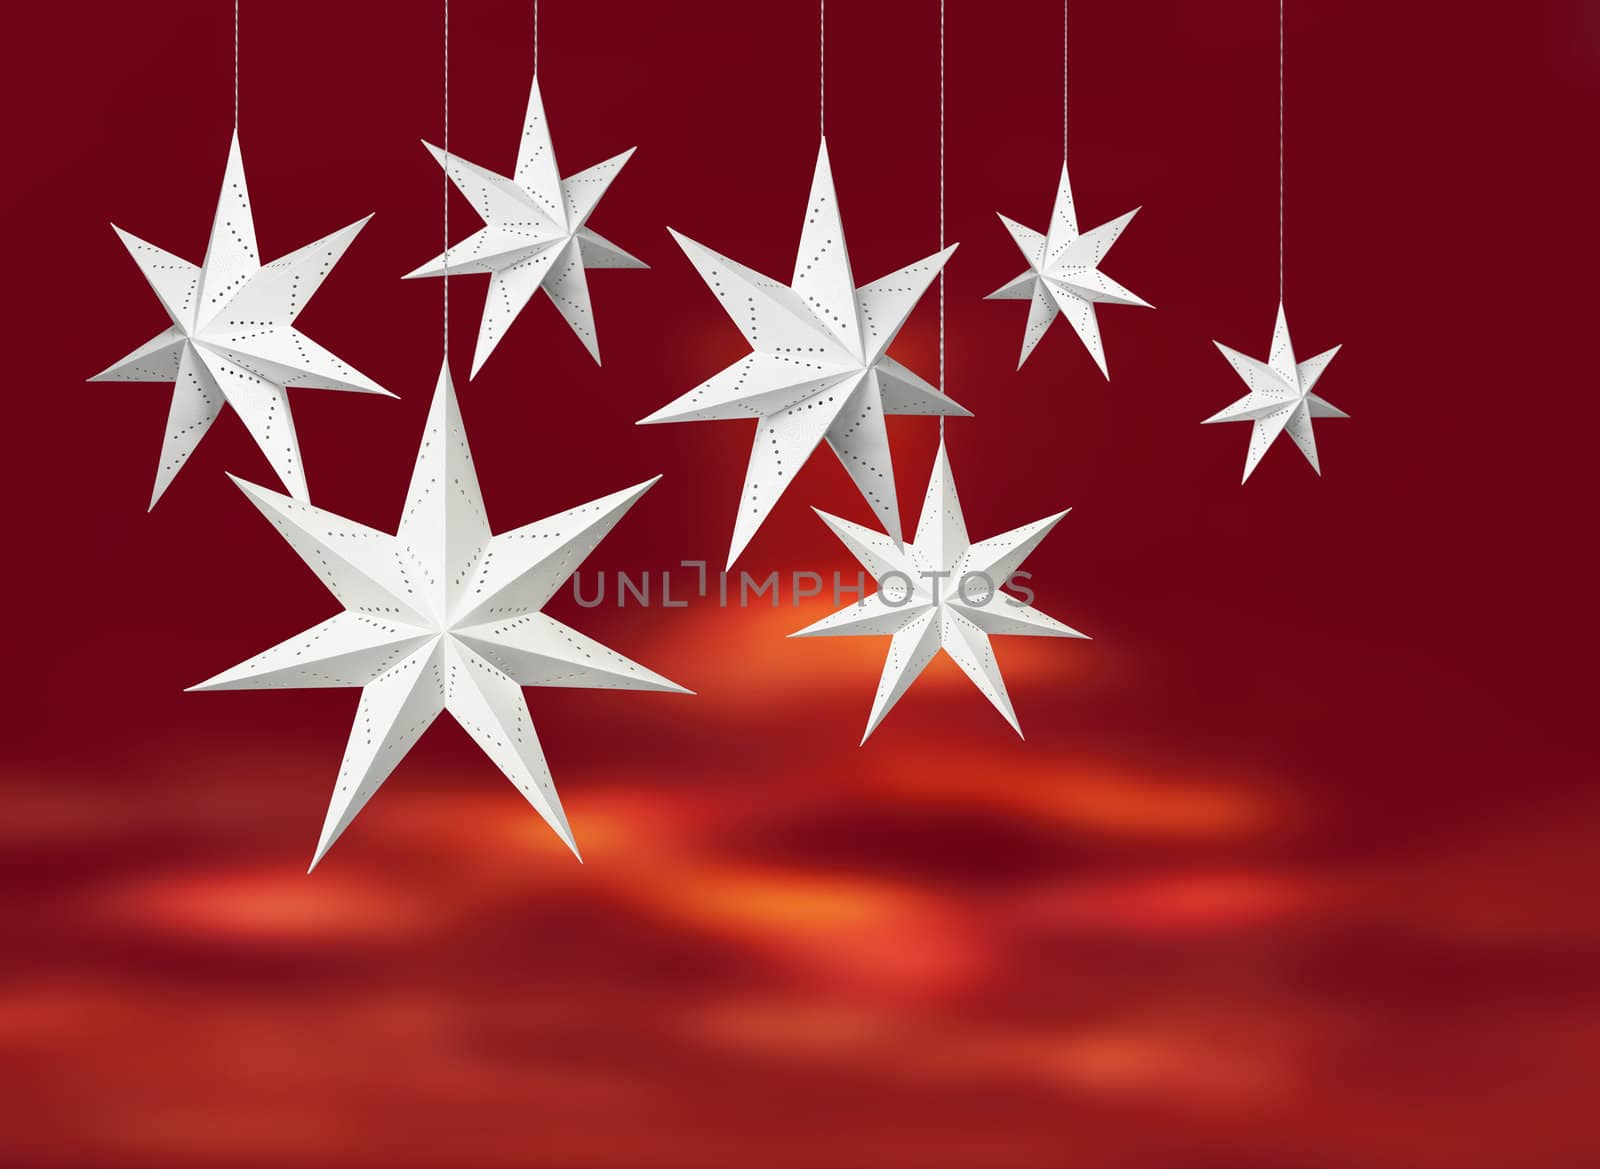 White paper stars on red by anterovium